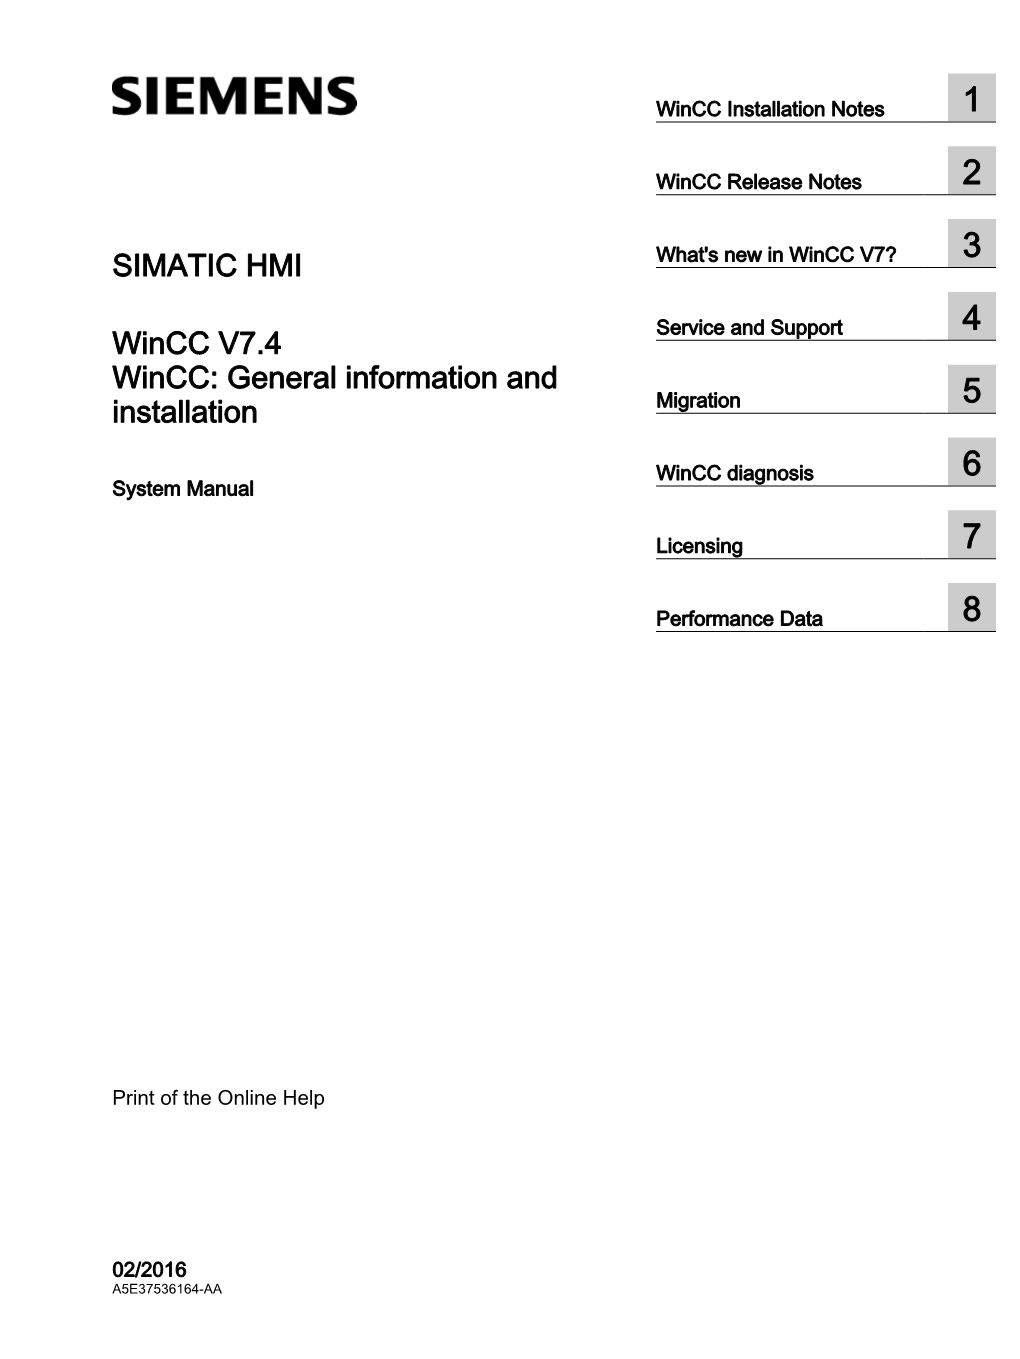 SIMATIC HMI Wincc V7.4